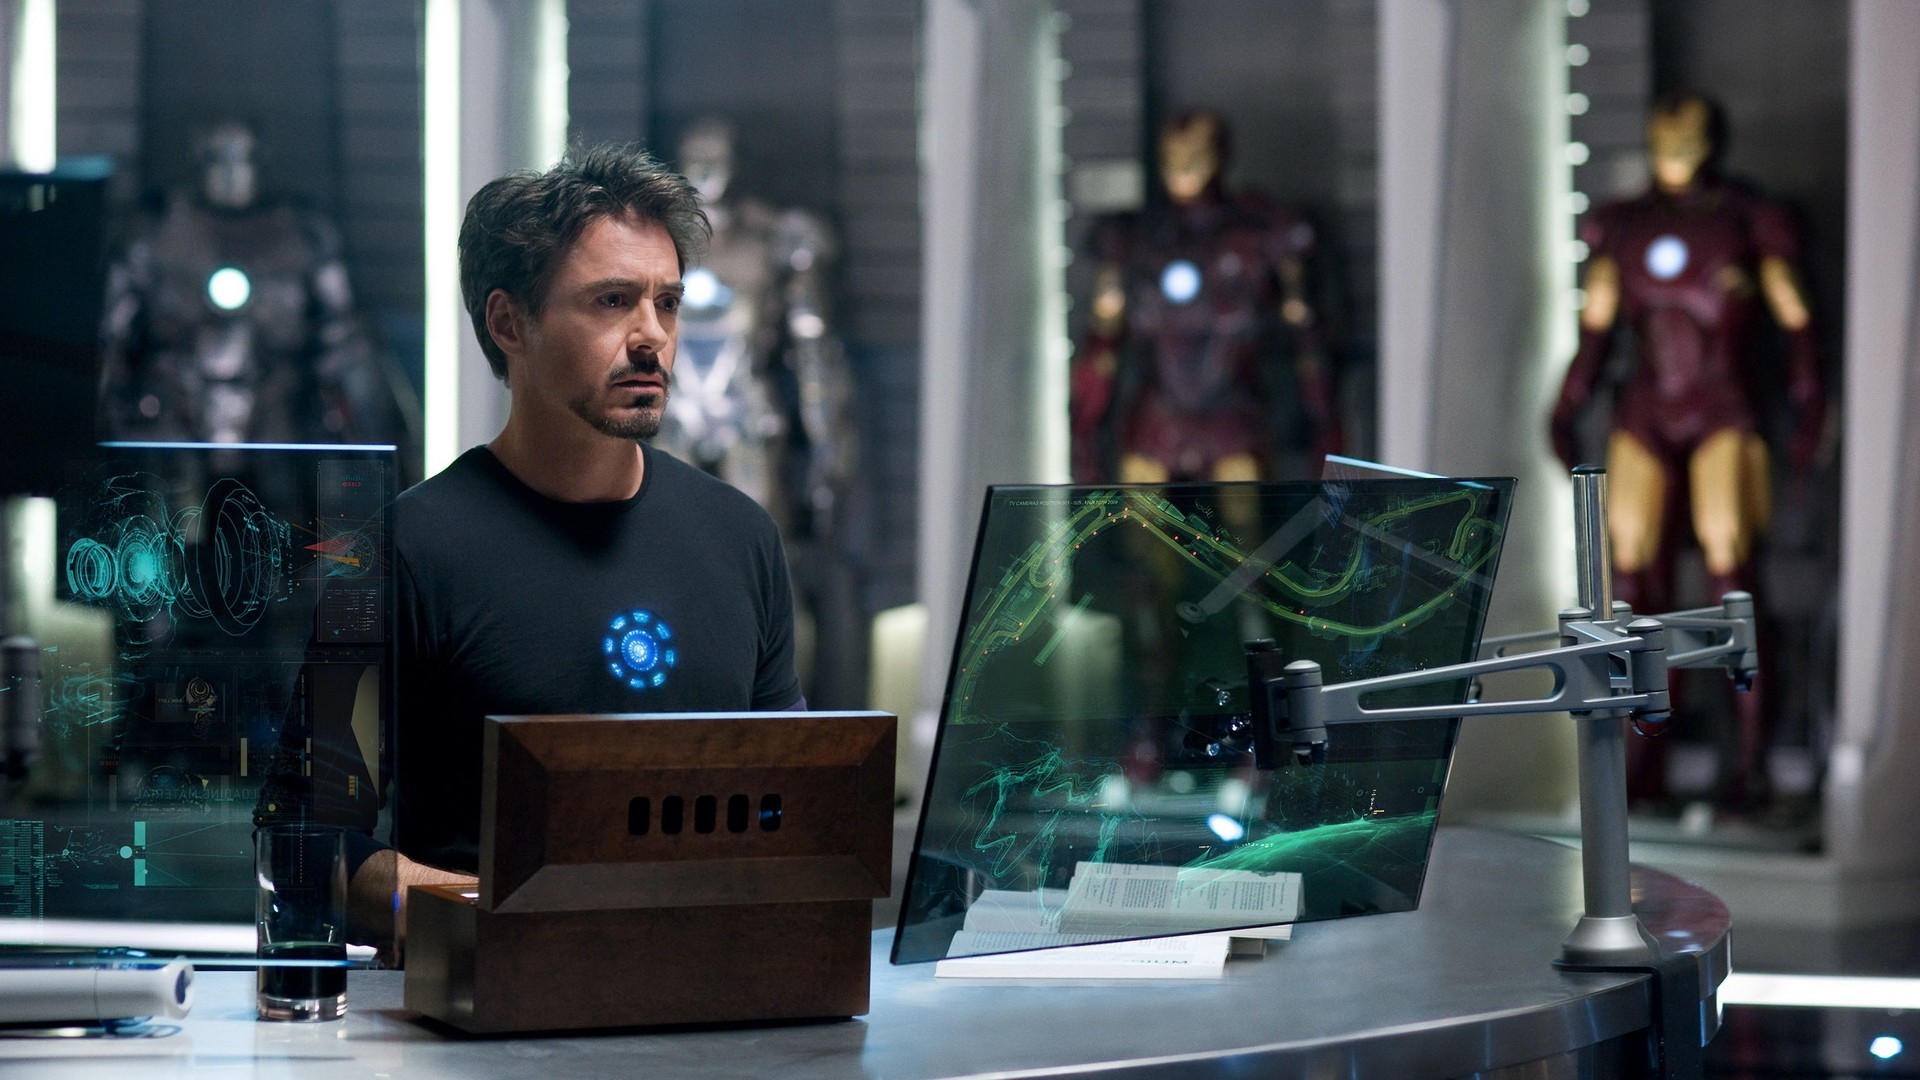 People 1920x1080 Iron Man 2 Tony Stark Robert Downey Jr. Iron Man movies film stills Marvel Cinematic Universe men